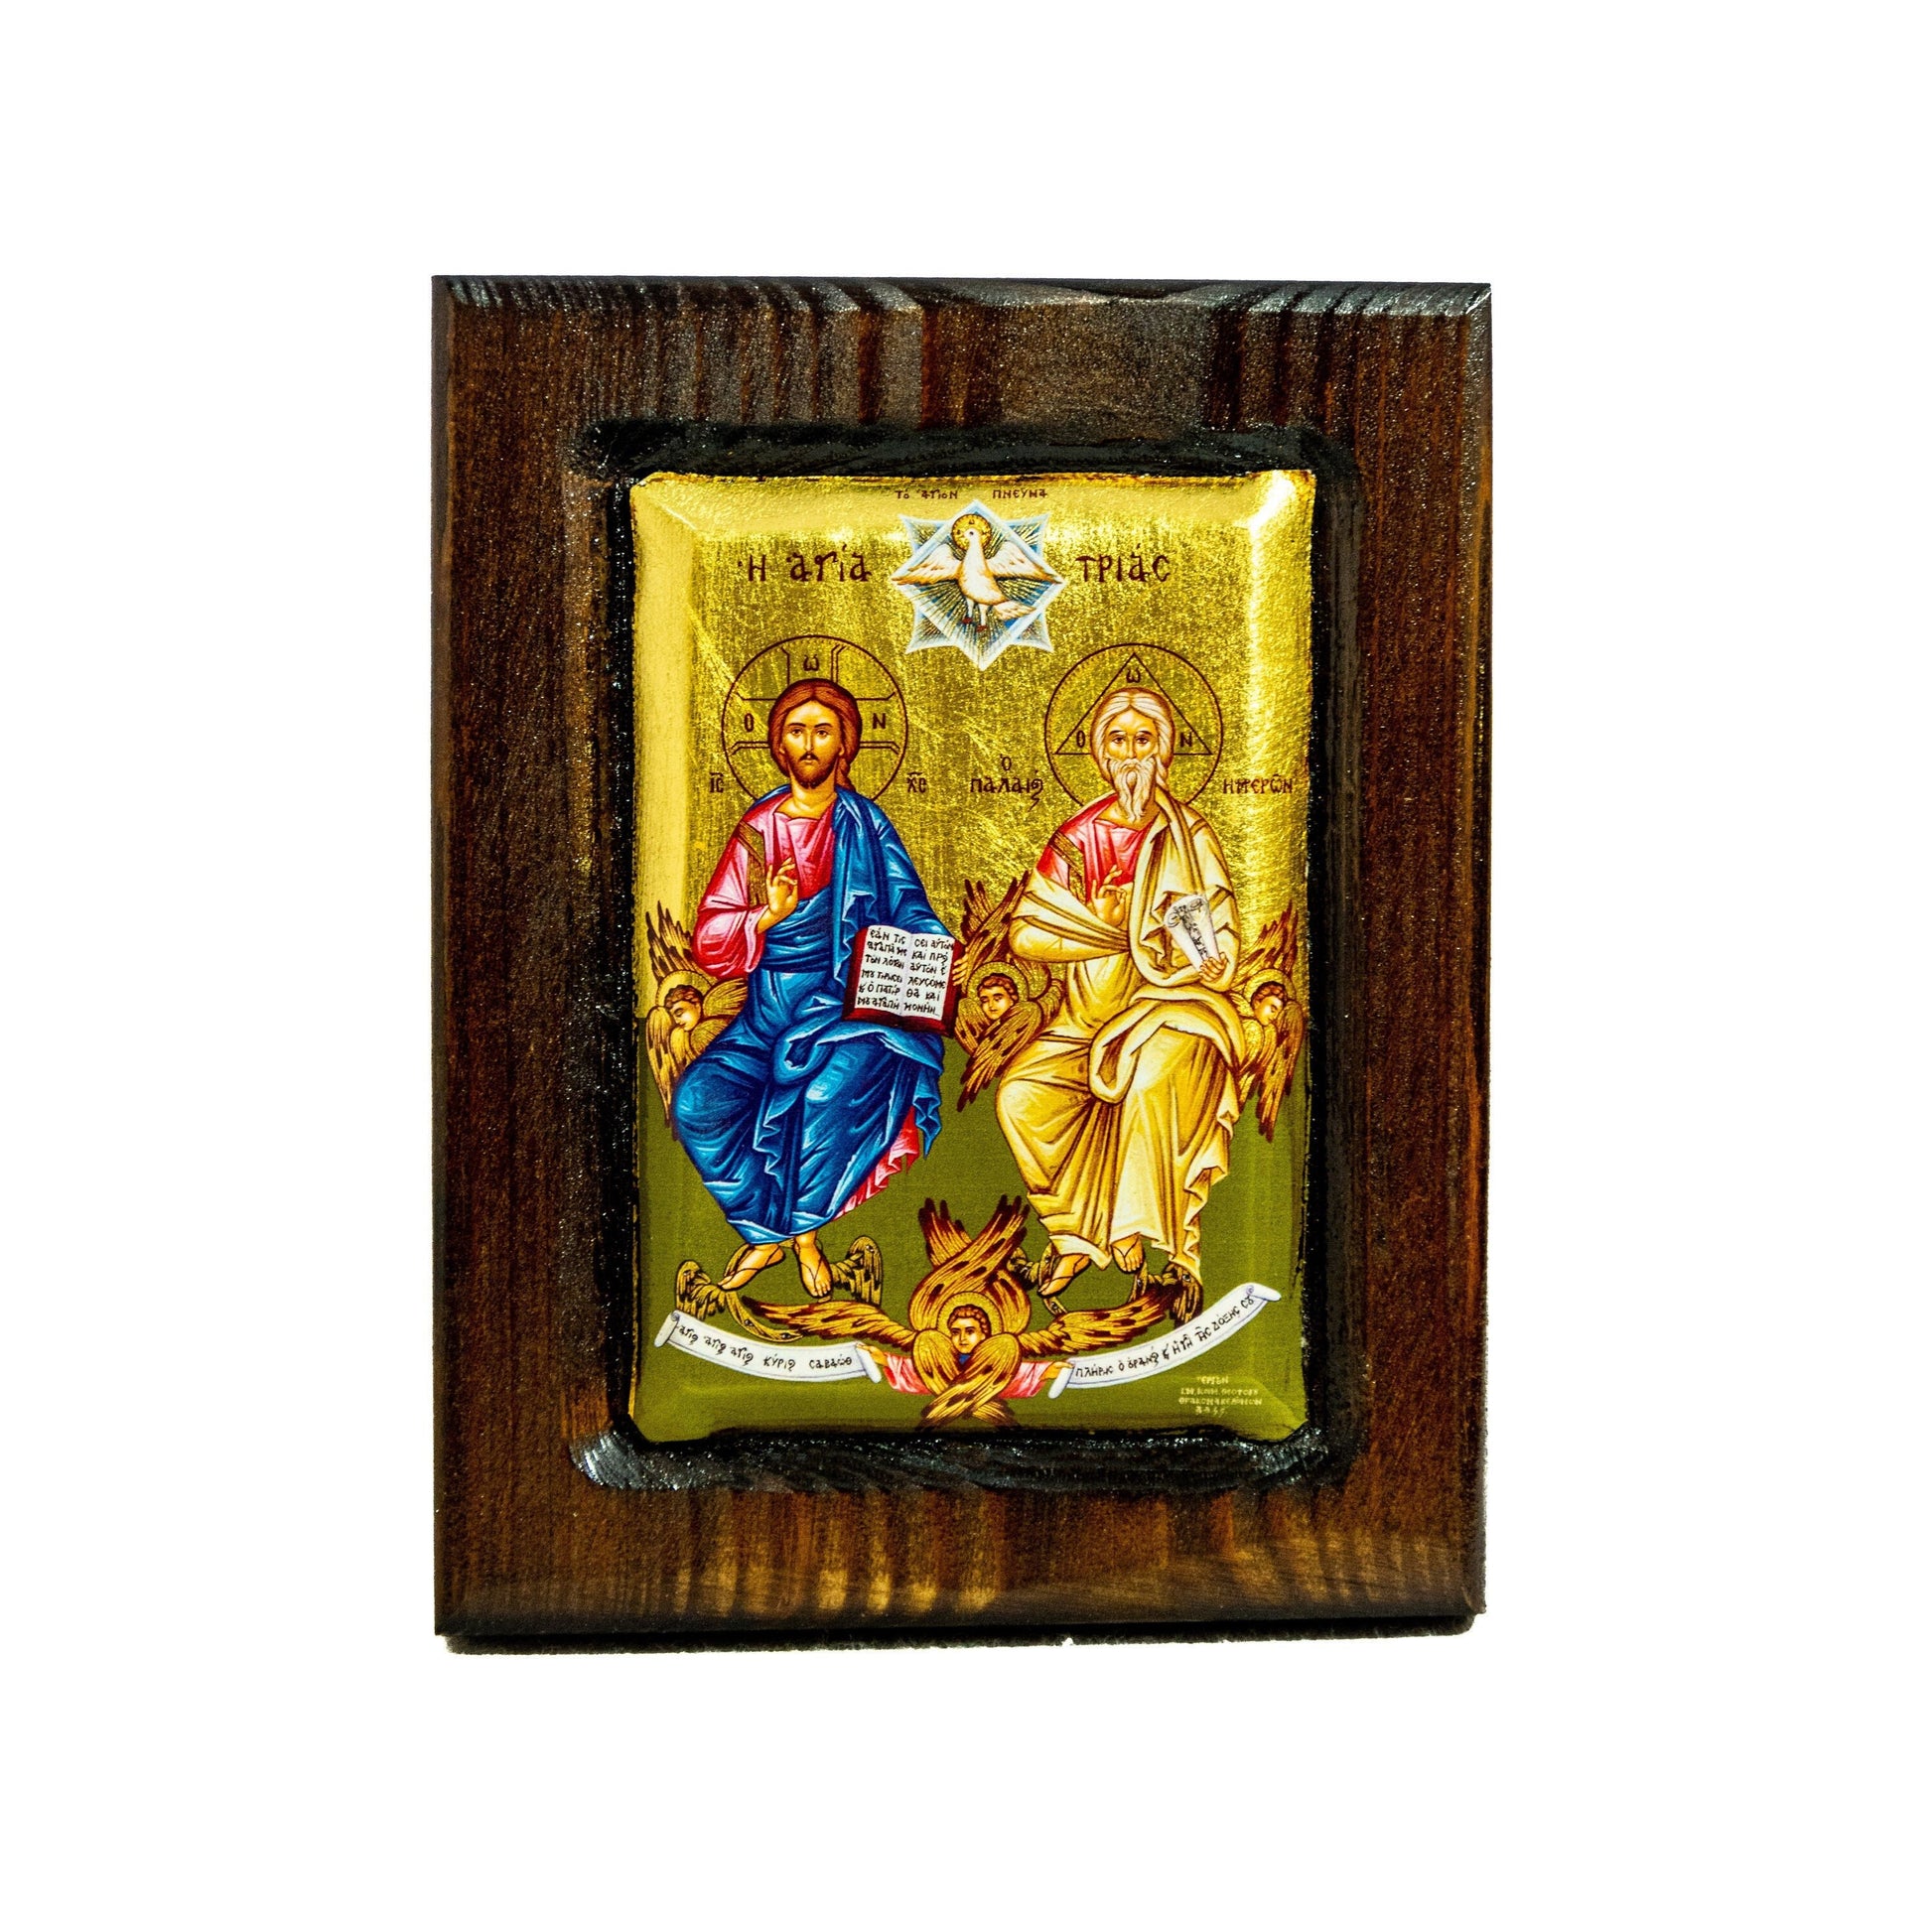 The Holy Trinity icon, Jesus Christ Handmade Greek Orthodox icon, Byzantine art wall hanging on wood plaque w/ gold leaf, religious gift TheHolyArt